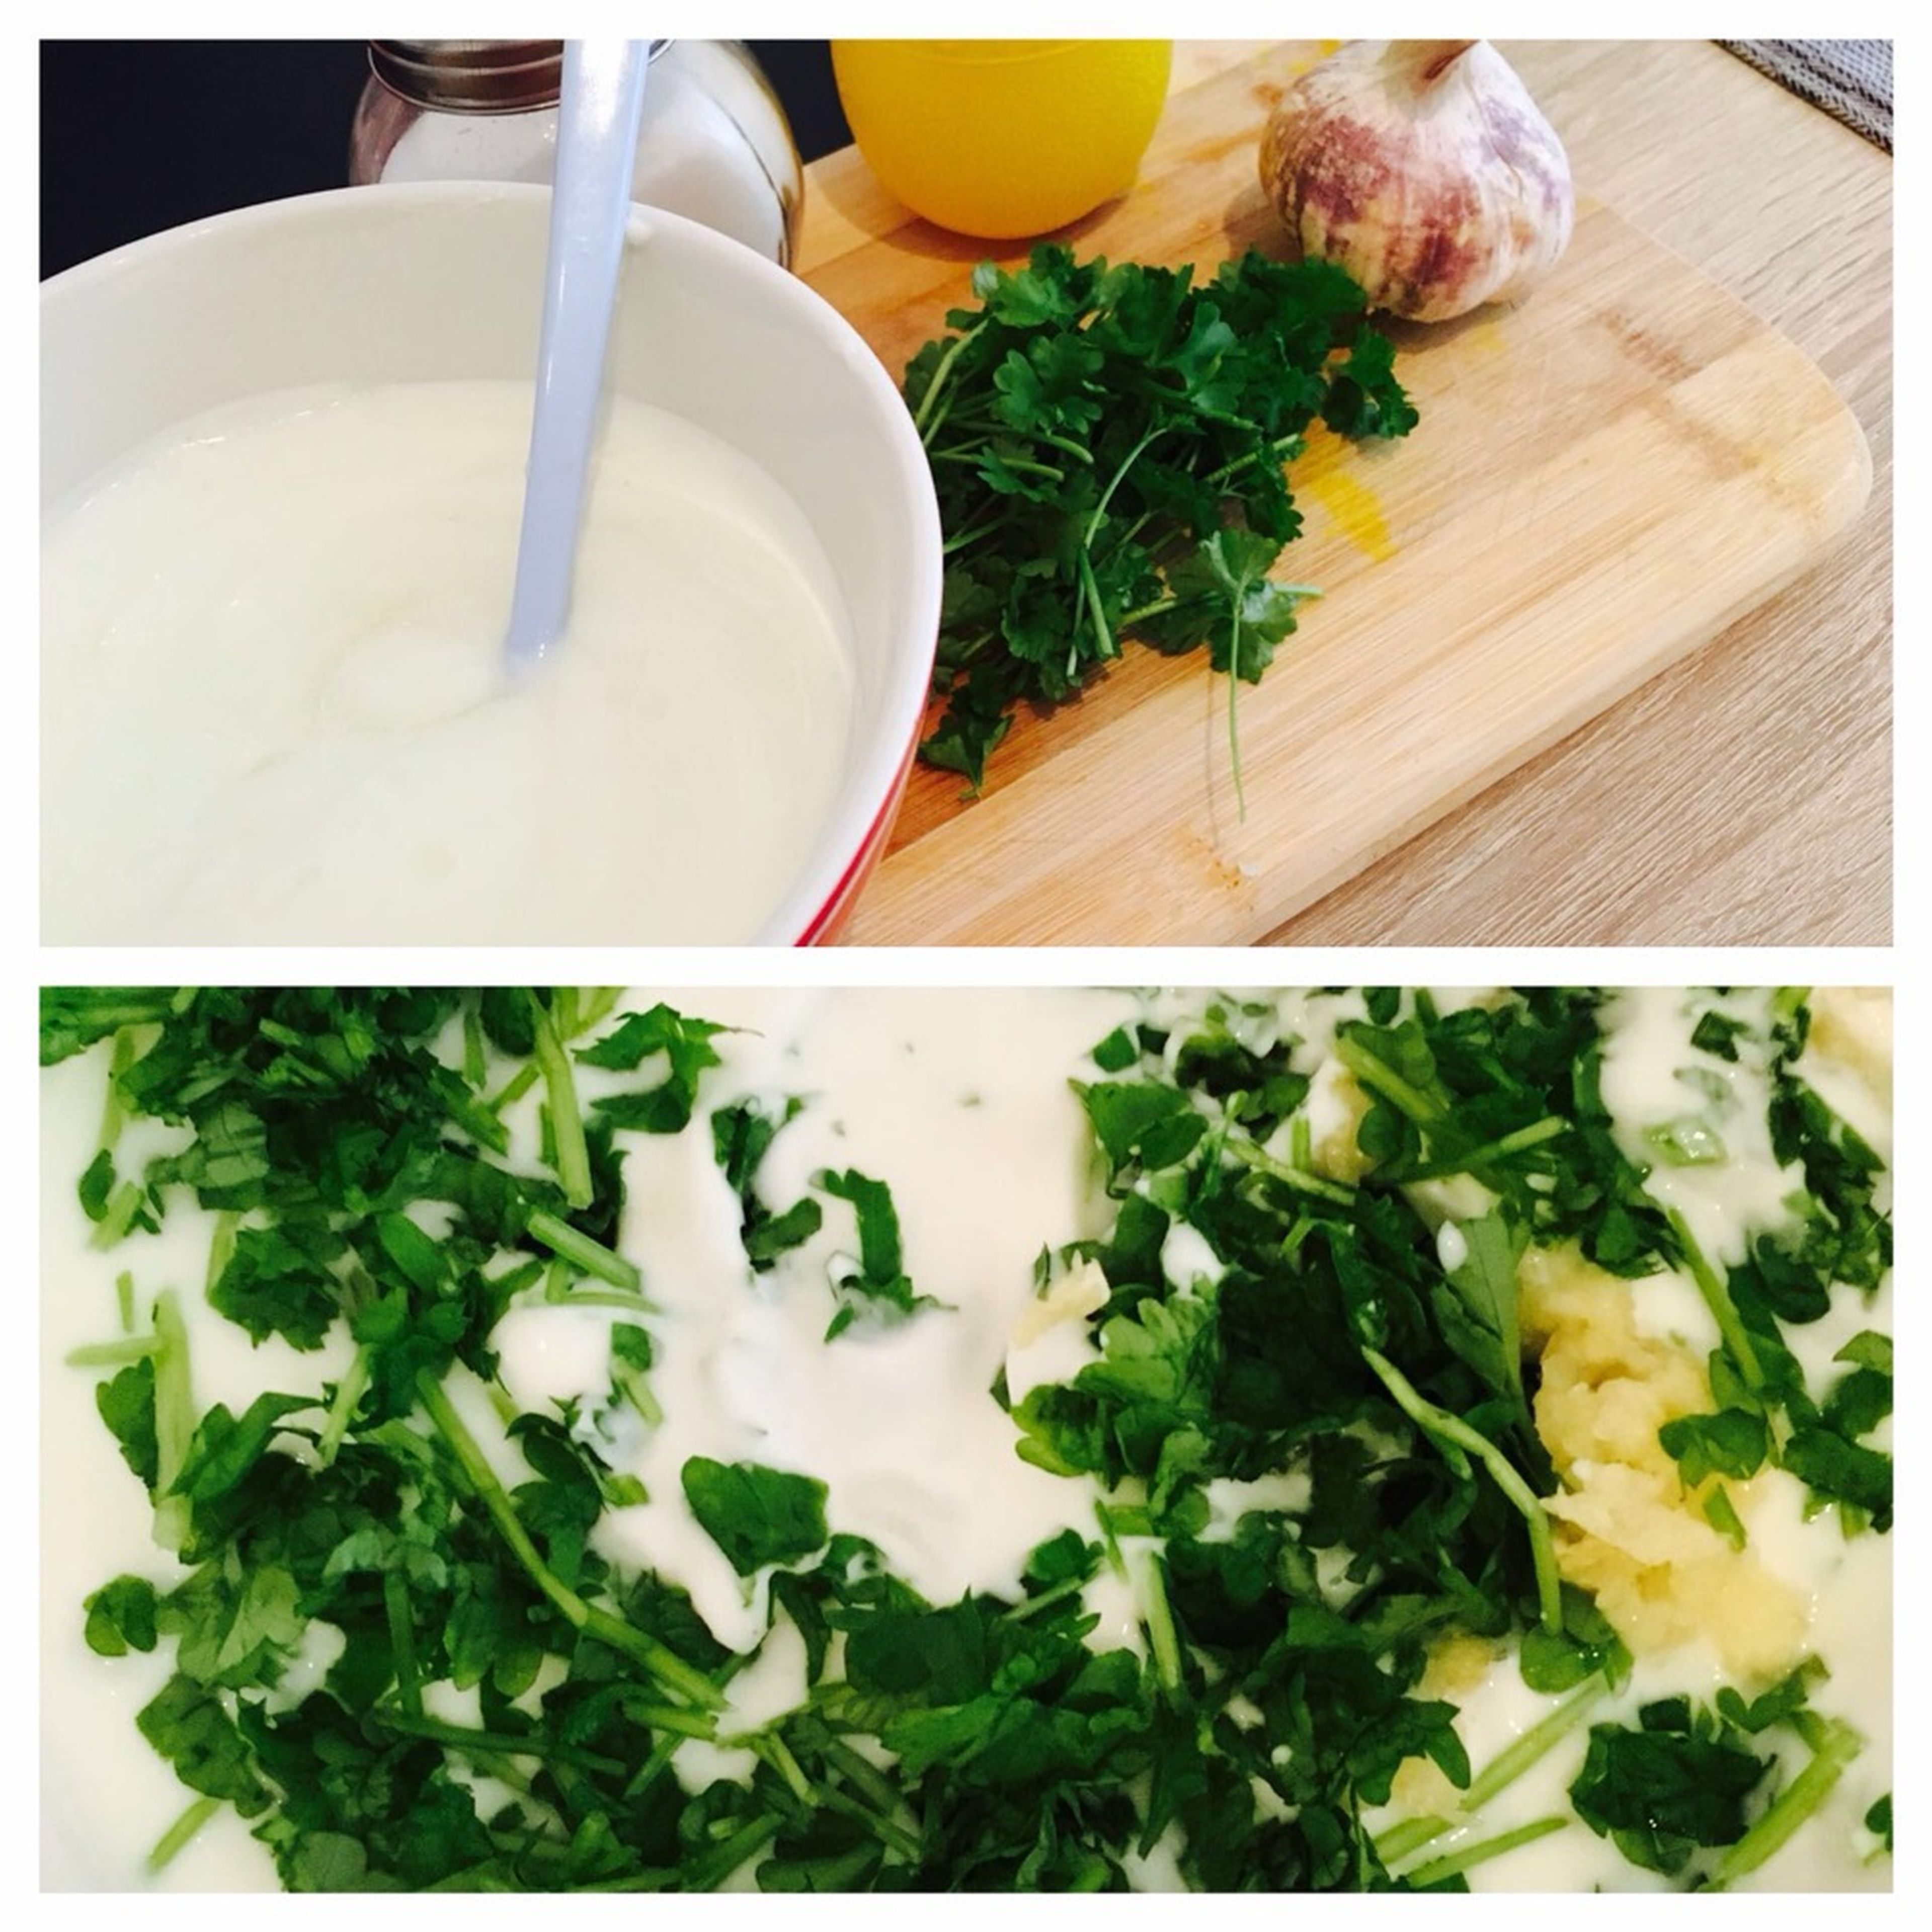 For the sauce, combine yogurt, salt, lemon juice, garlic (chopped) and parsley (chopped).